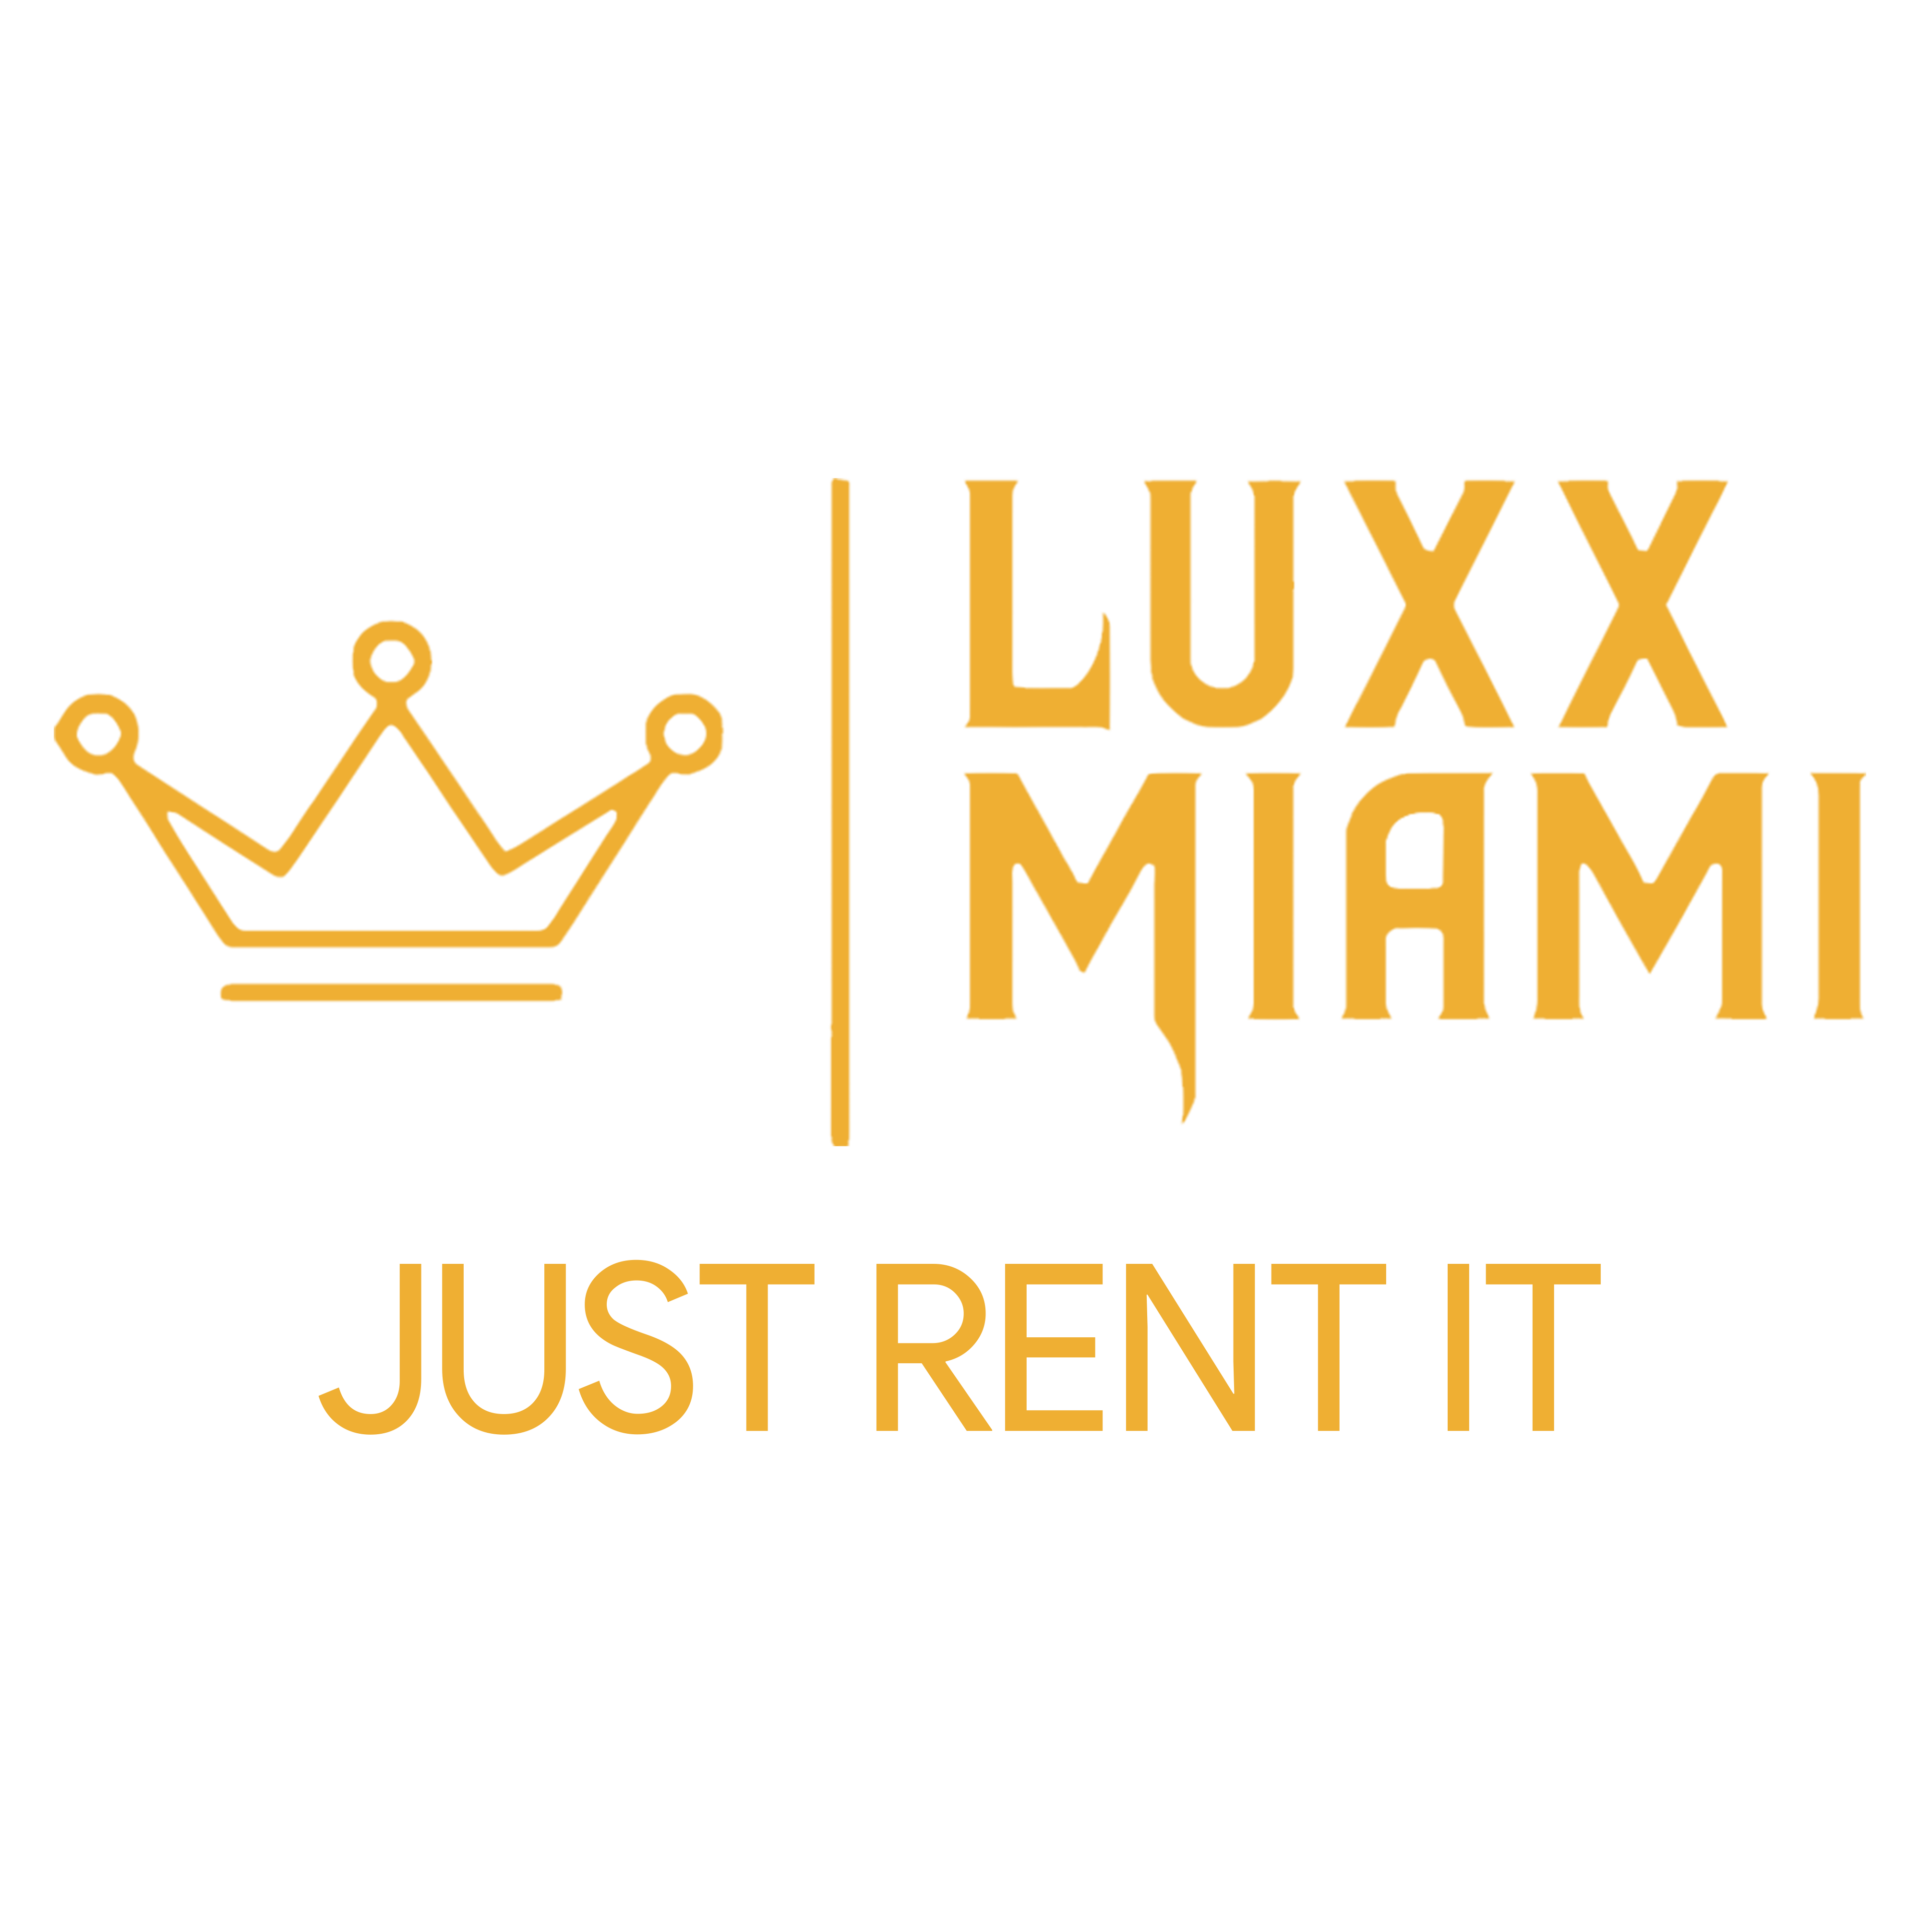 Miami Club Guide - Luxx Miami Exotic Car Rental Miami - Exotic Car